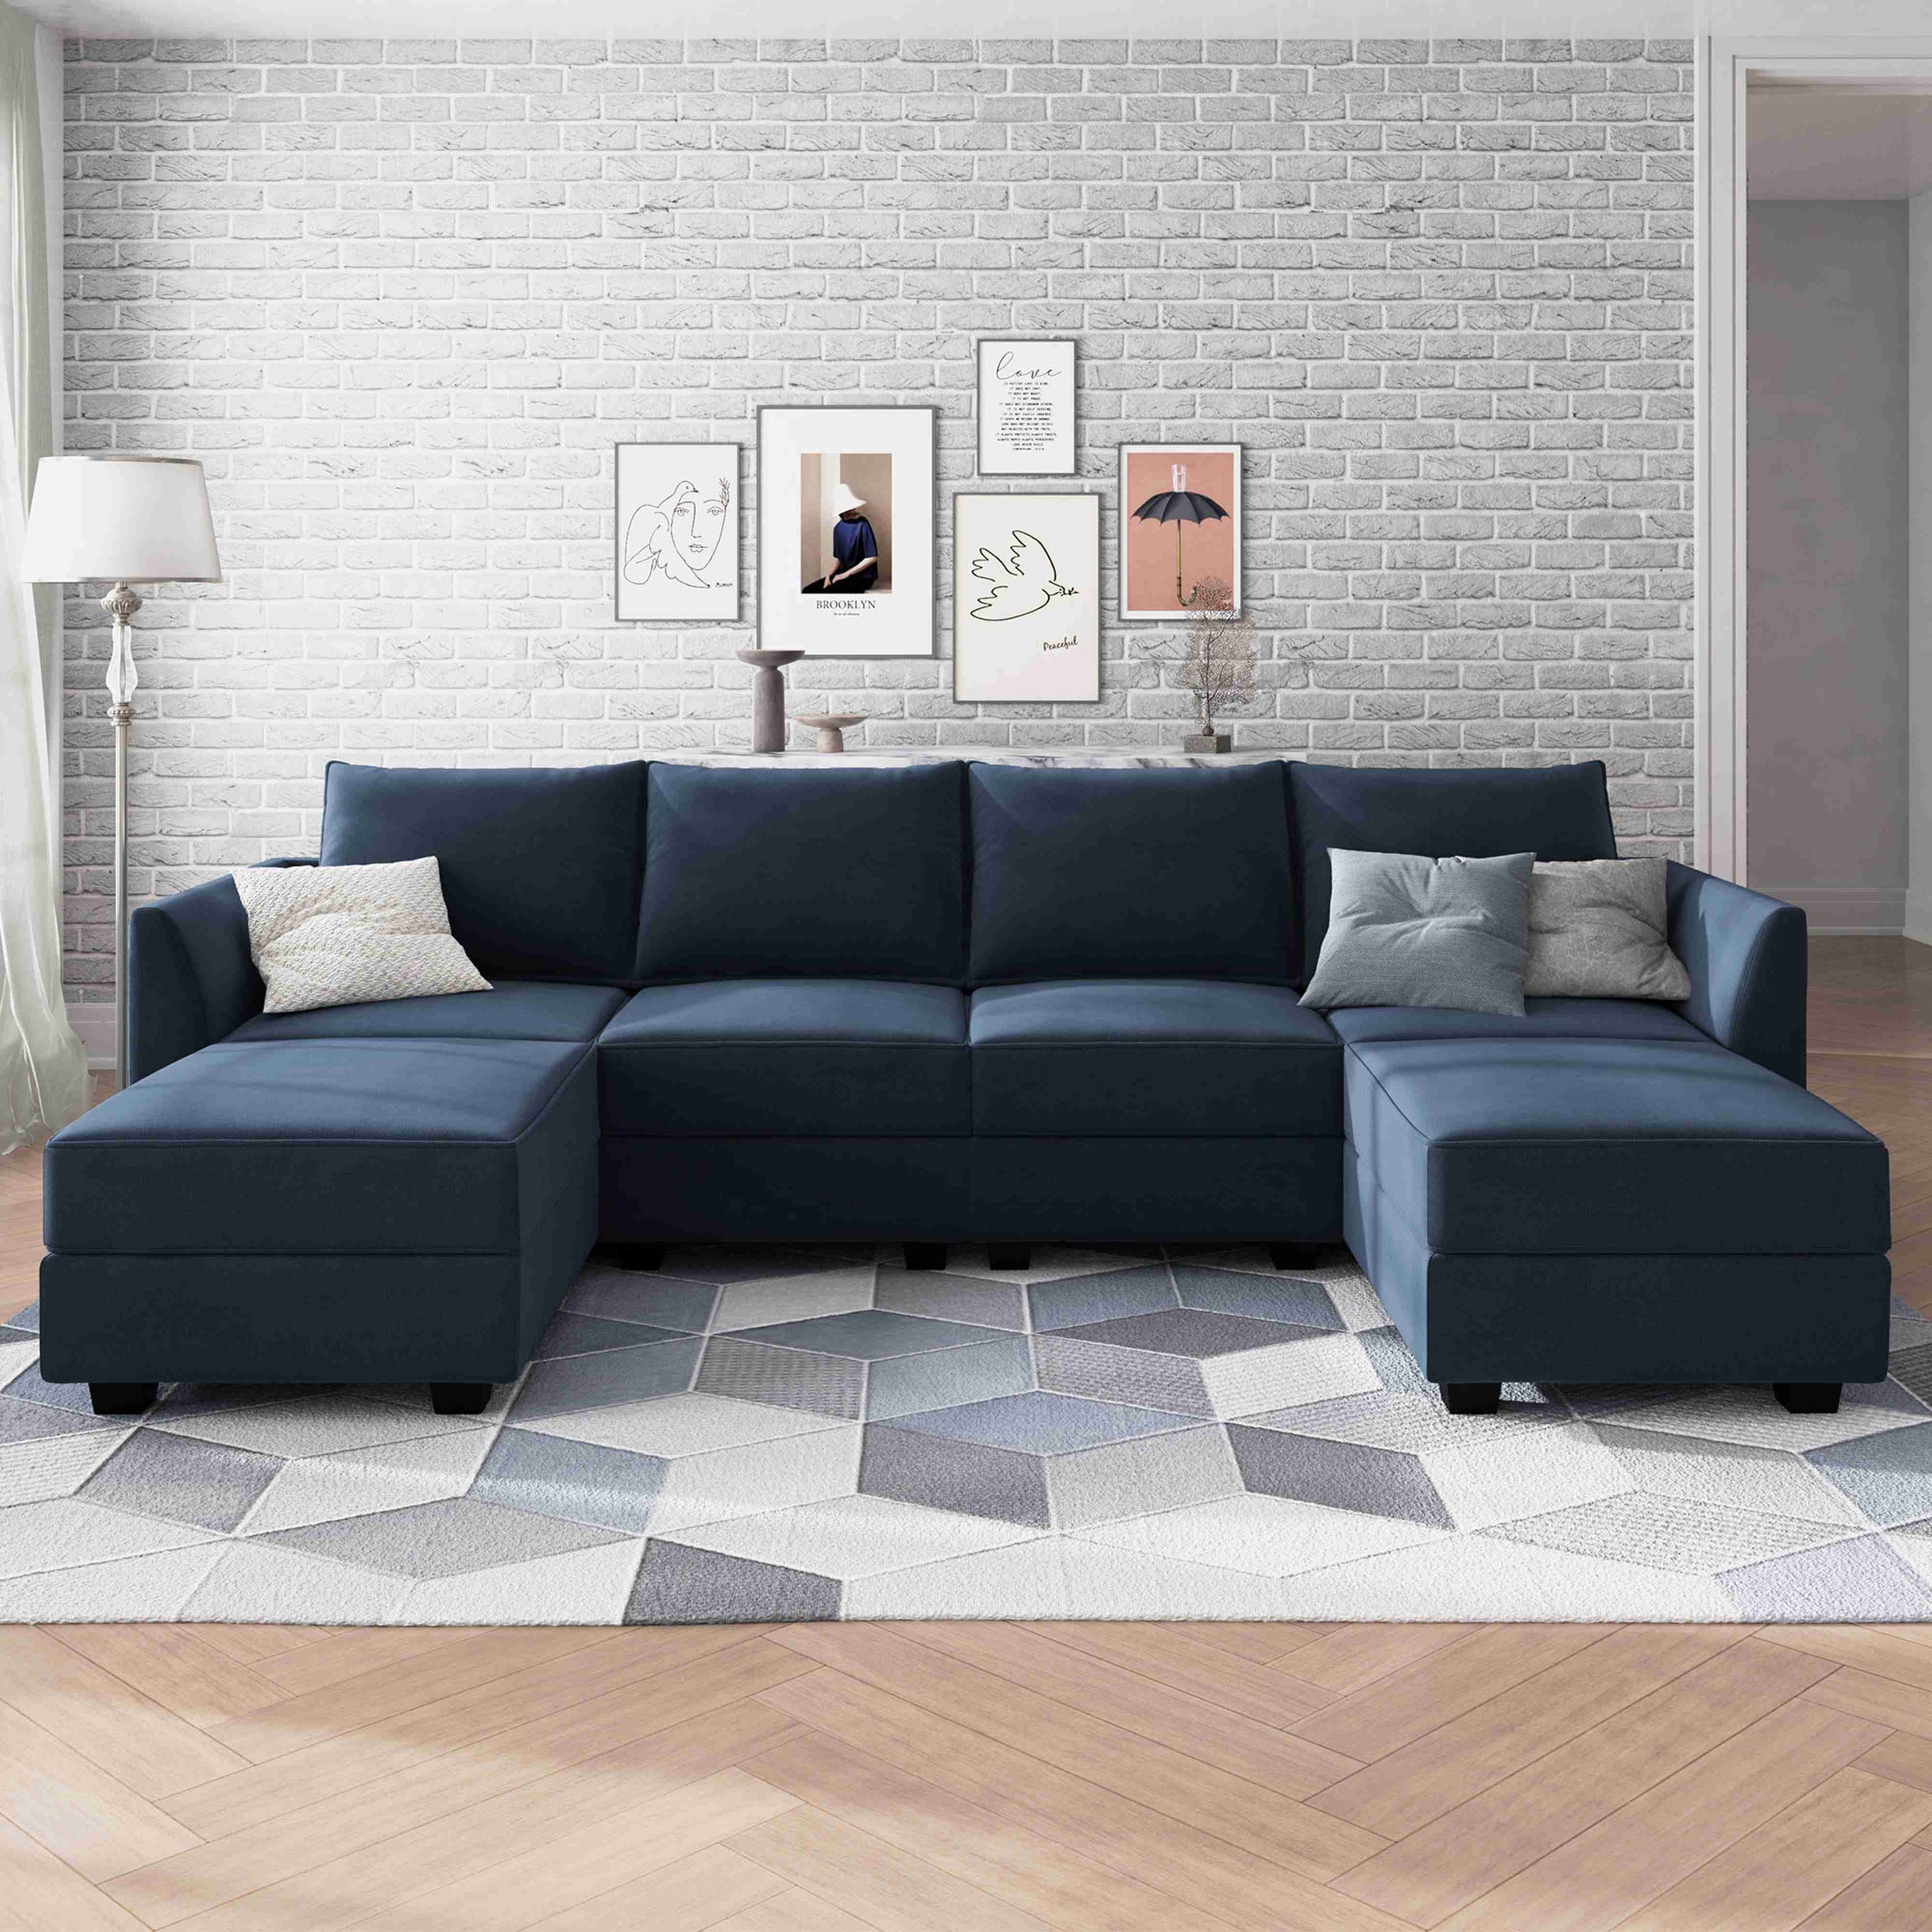 Honbay Velvet Upholstered Modular Sectional Sleeper Sofa With Storage  Ottomans, Free Combination Sofa For Living Room, Navy Blue – Walmart Intended For Upholstered Modular Couches With Storage (View 5 of 15)